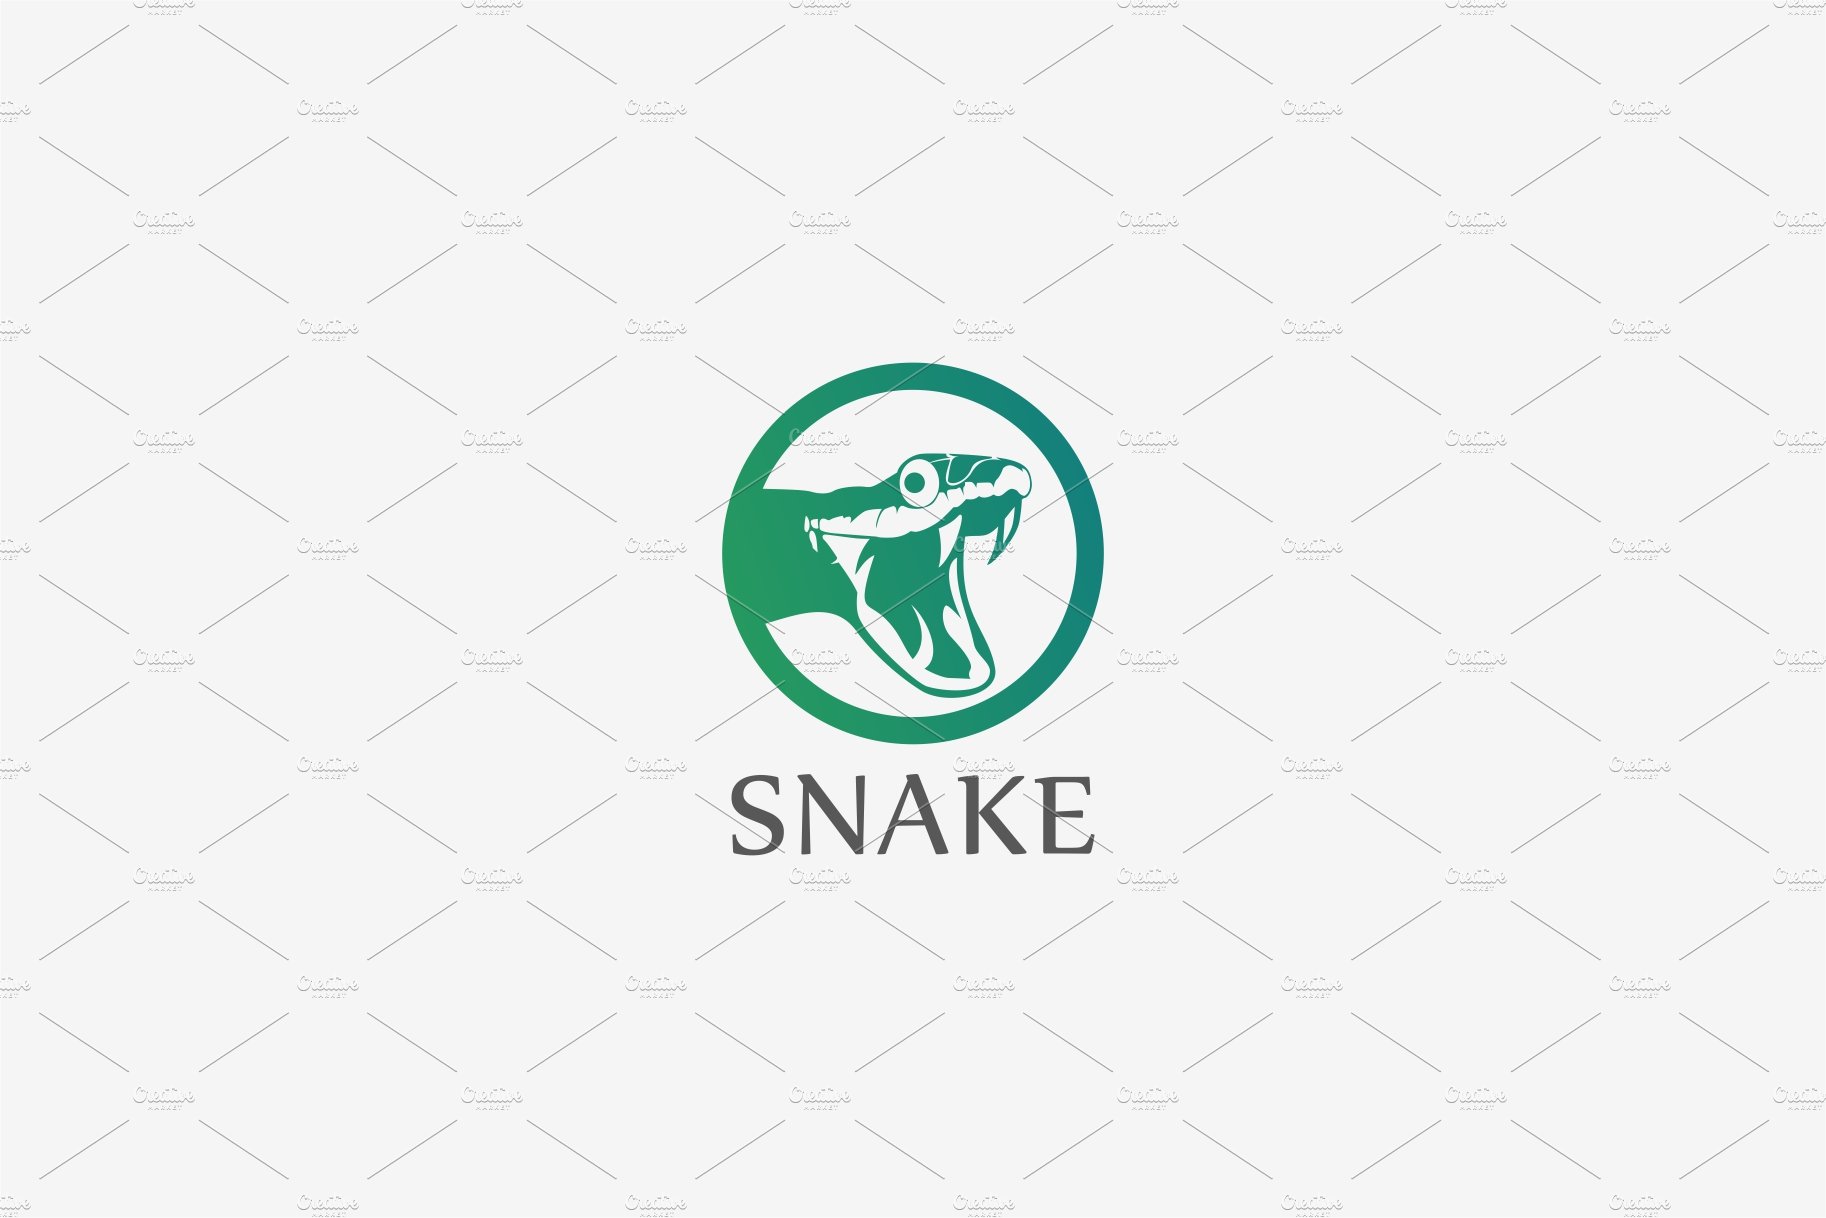 Snake Logo Design cover image.